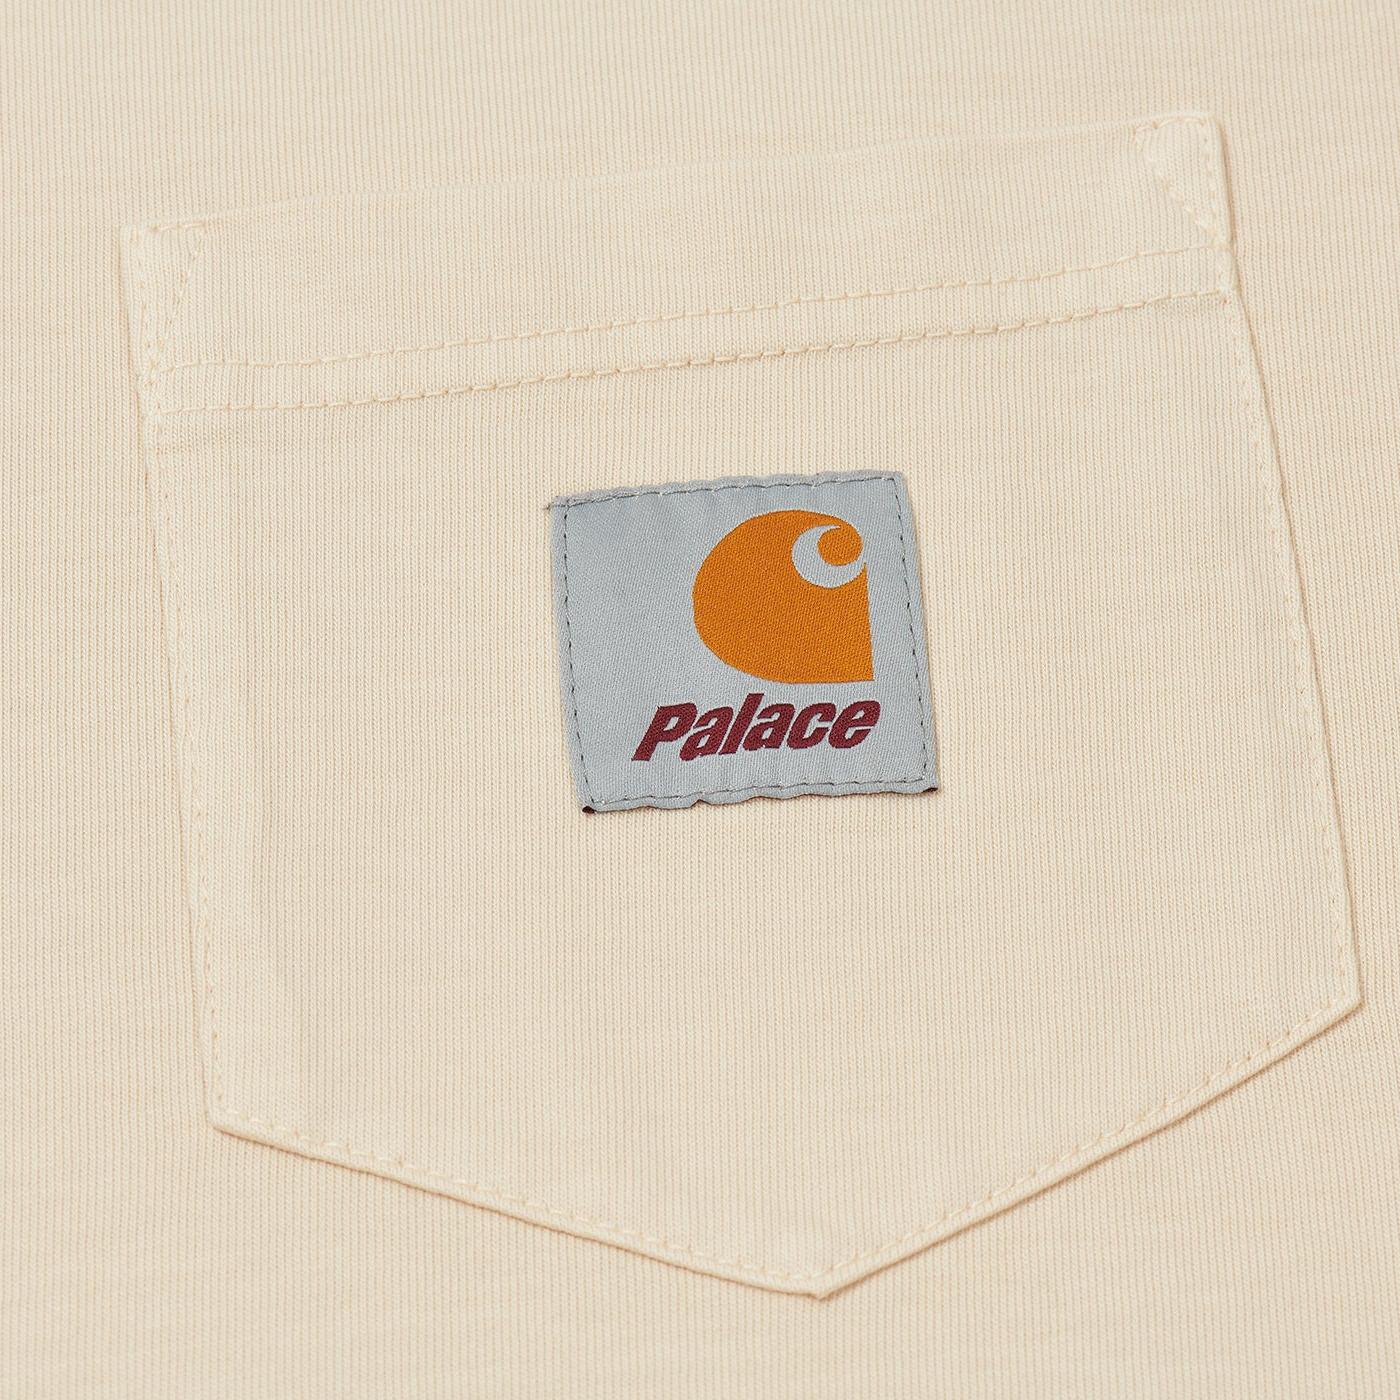 Palace Carhartt Wip S/s Pocket T-Shirt Palace Wax - Palace